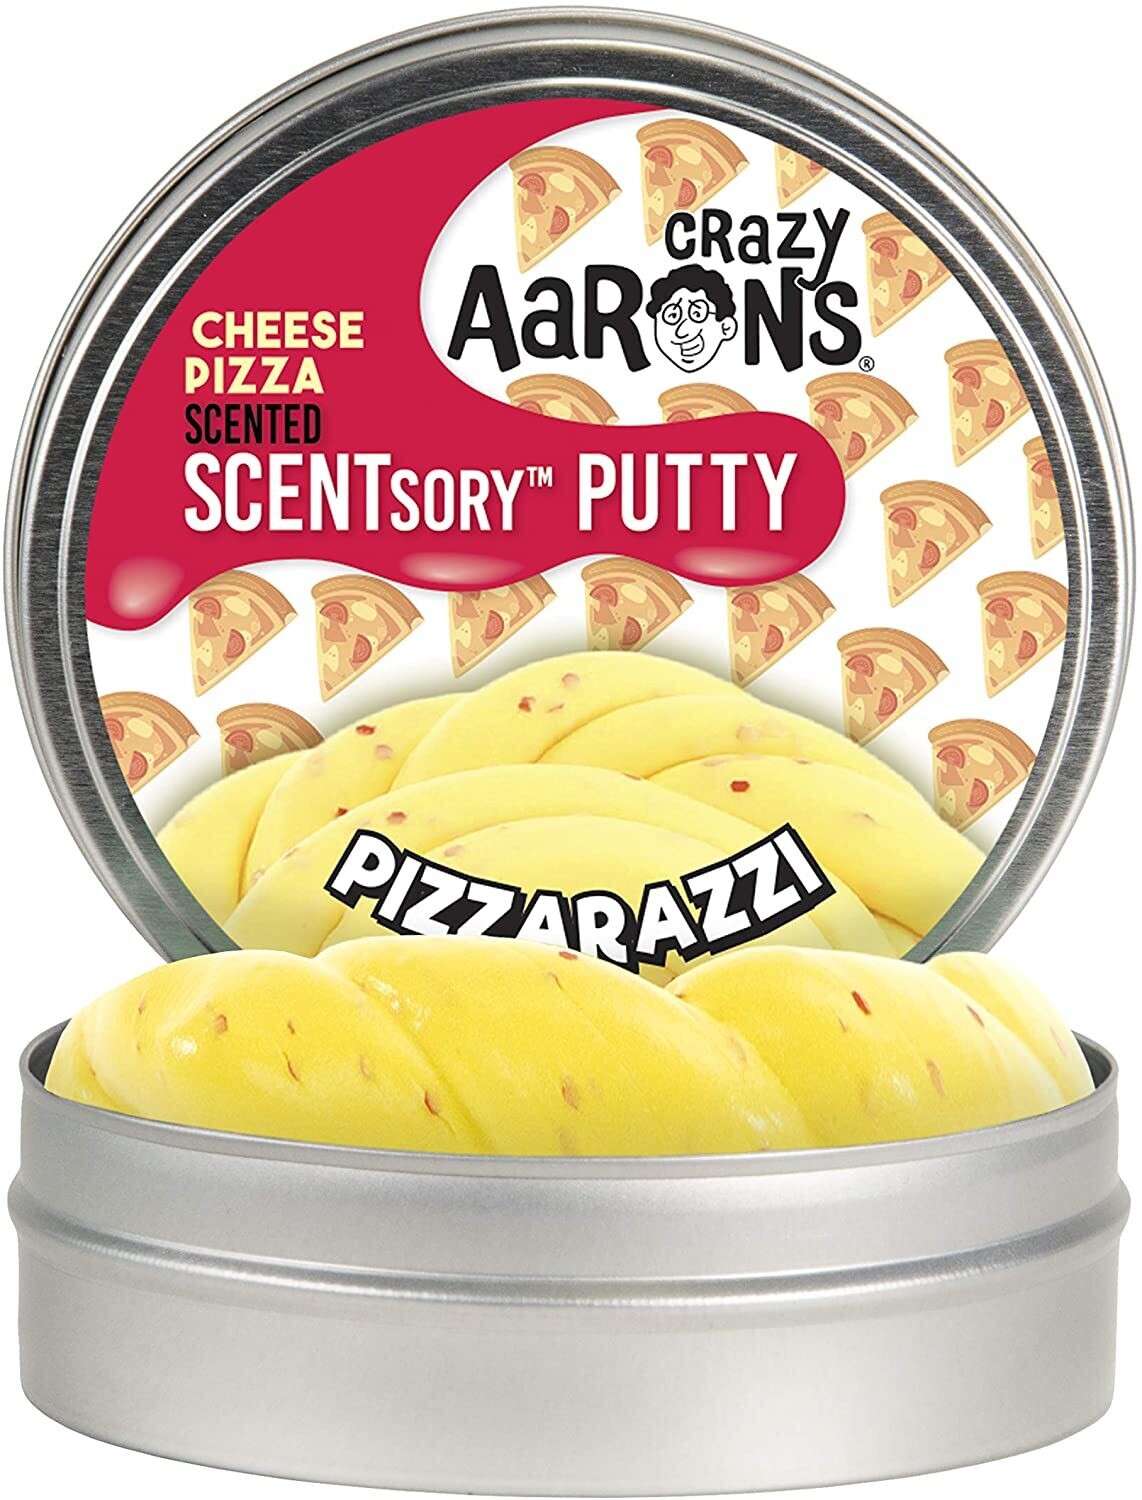 Crazy Aaron's SCENTsory Putty Pizzarazzi